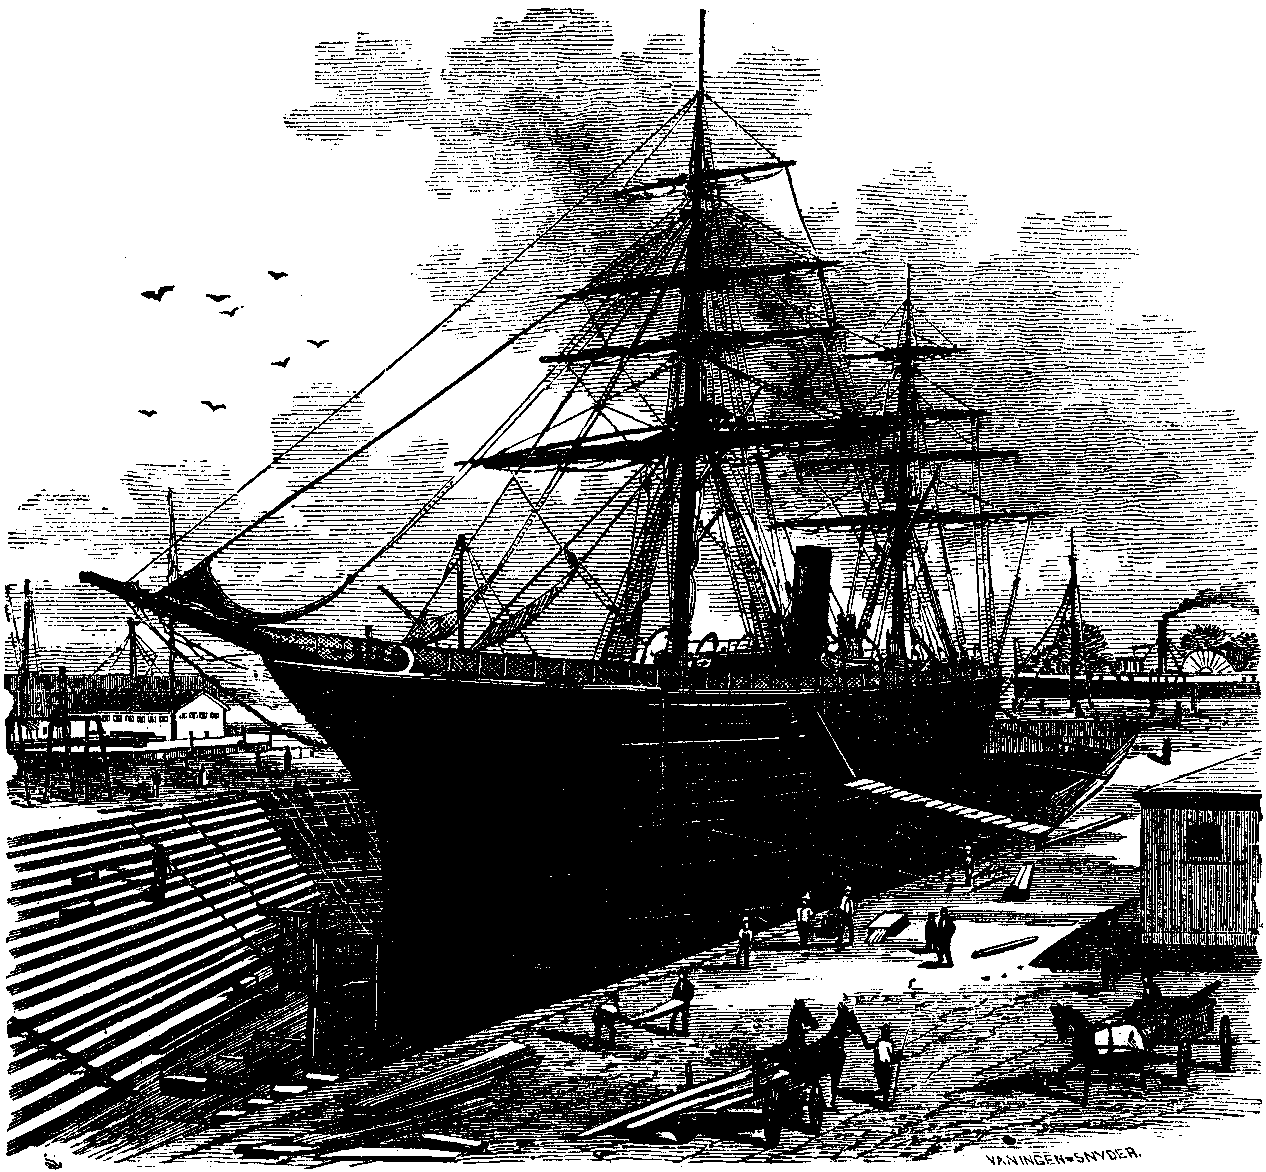 SHIP IN DRY-DOCK: HARLAN & HOLLINGSWORTH COMPANY.